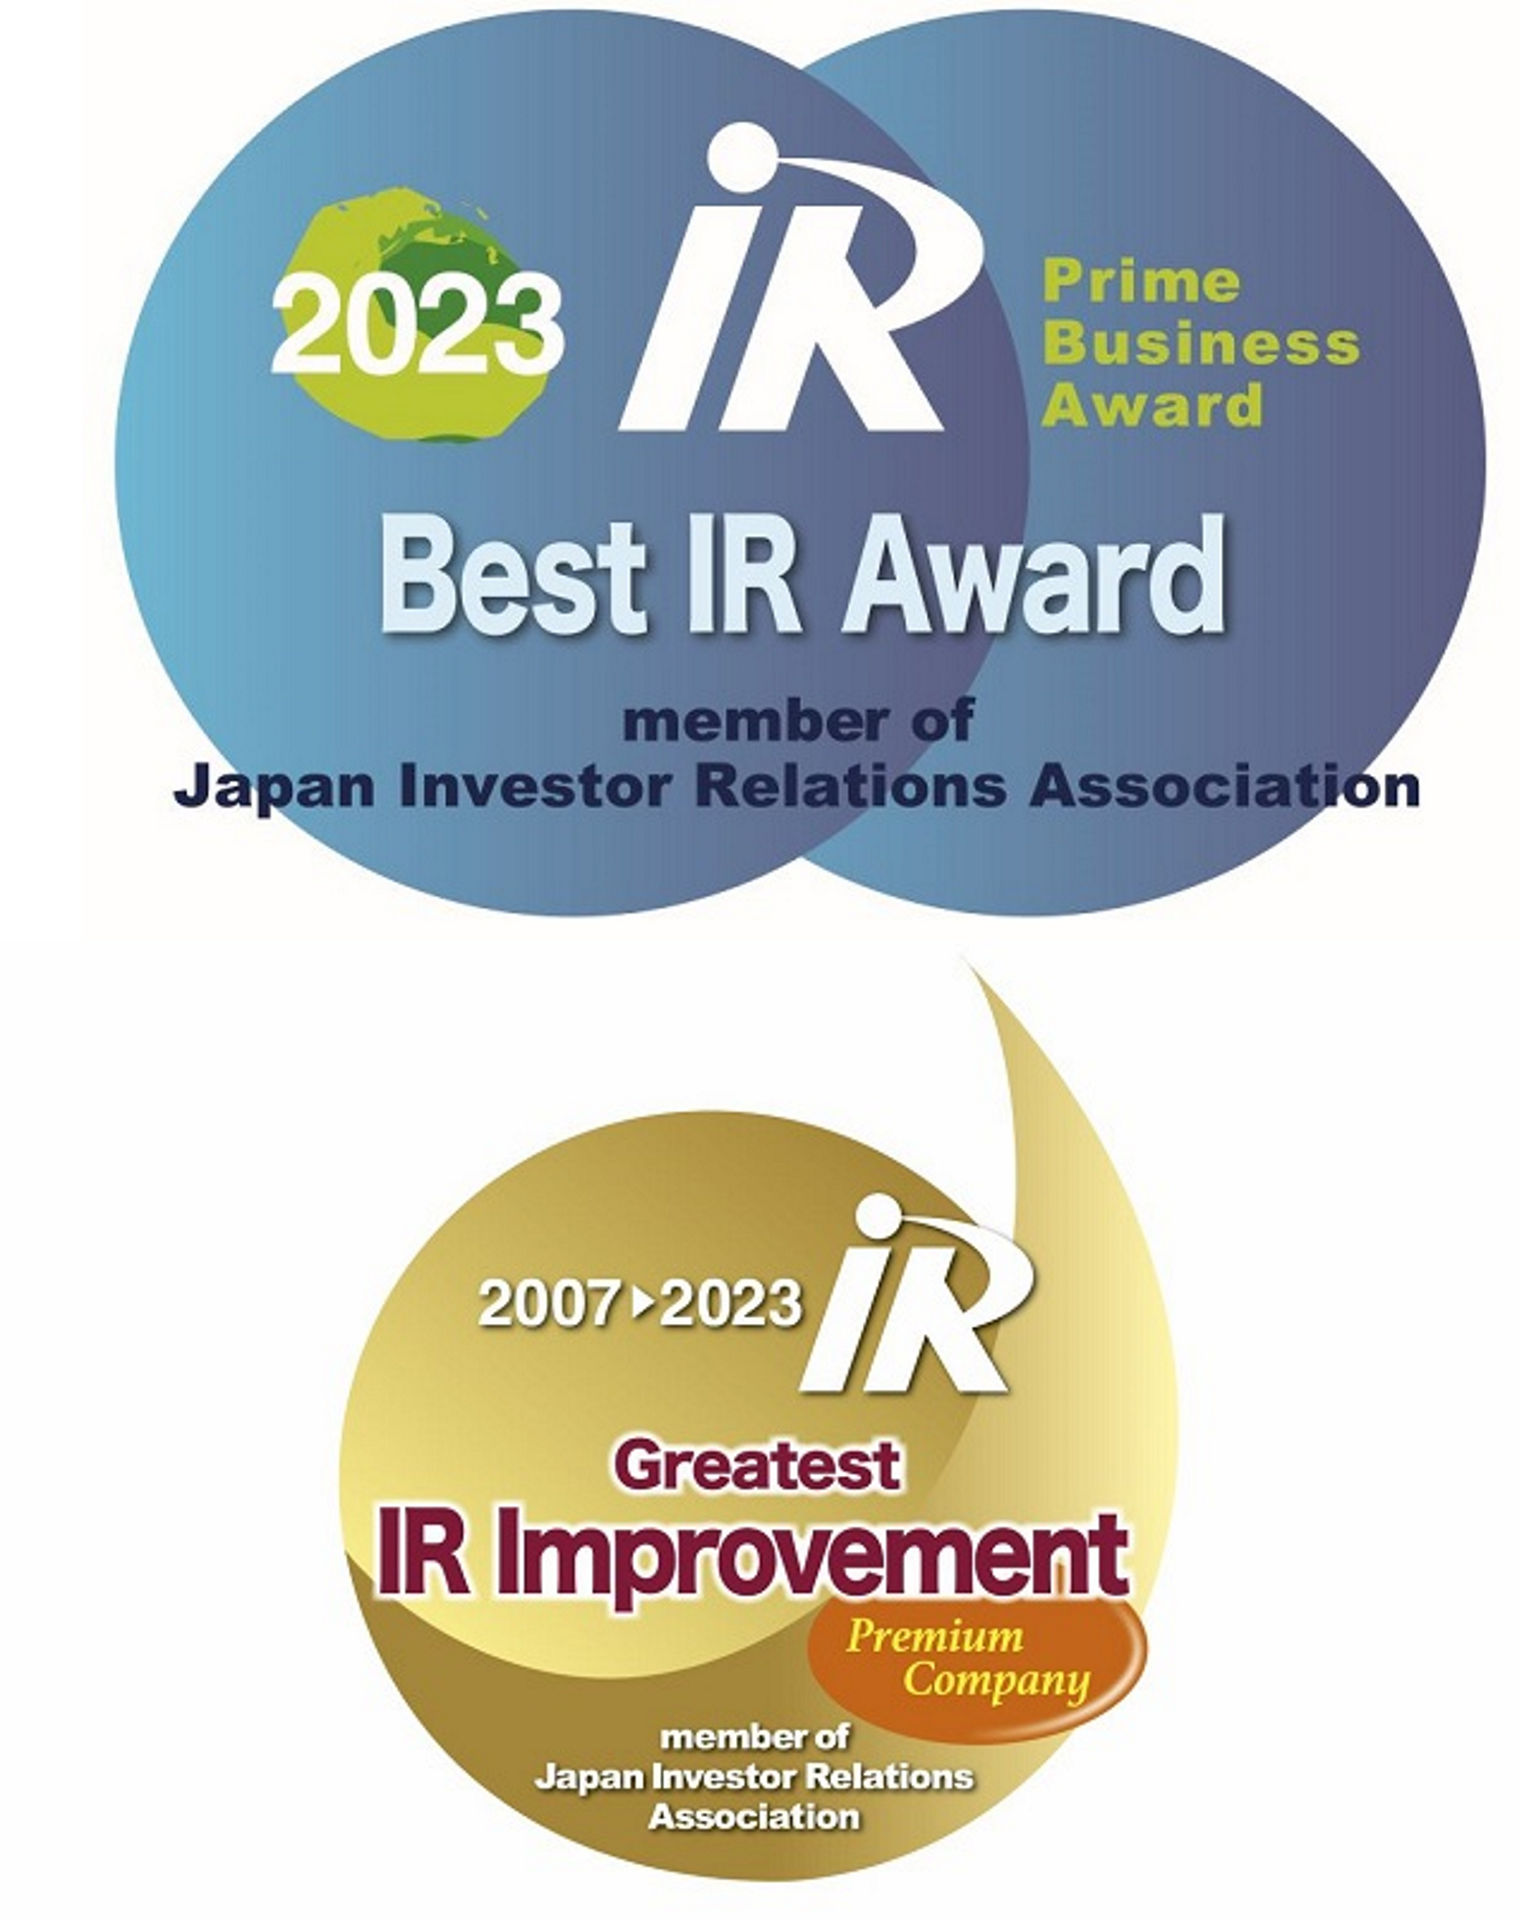 2023 Best IR Award